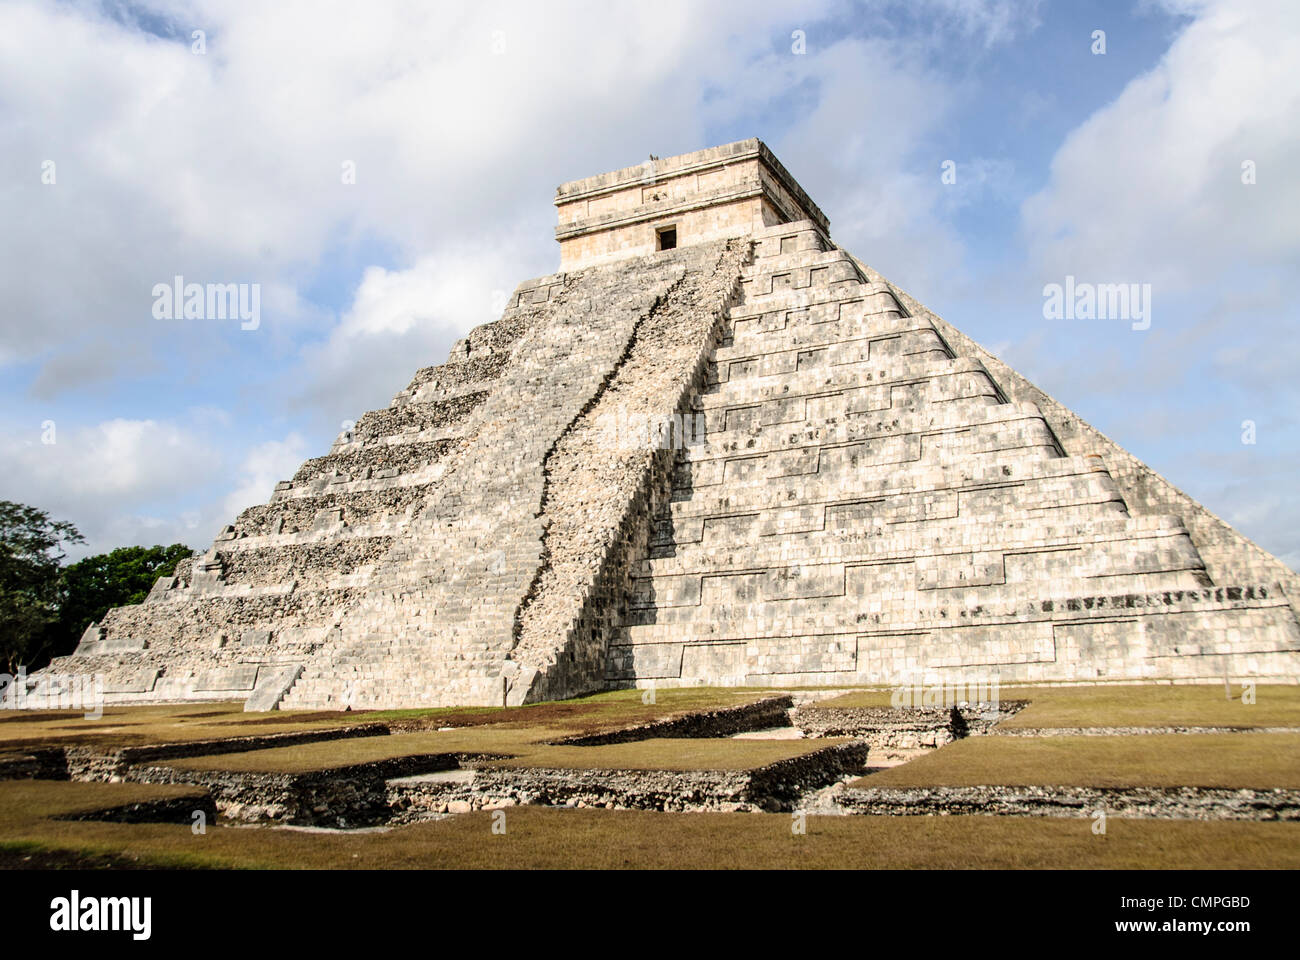 CHICHEN ITZA, Mexico - Wide shot of the Temple of Kukulkan (El Castillo) at Chichen Itza Archeological Zone, ruins of a major Maya civilization city in the heart of Mexico's Yucatan Peninsula. Stock Photo